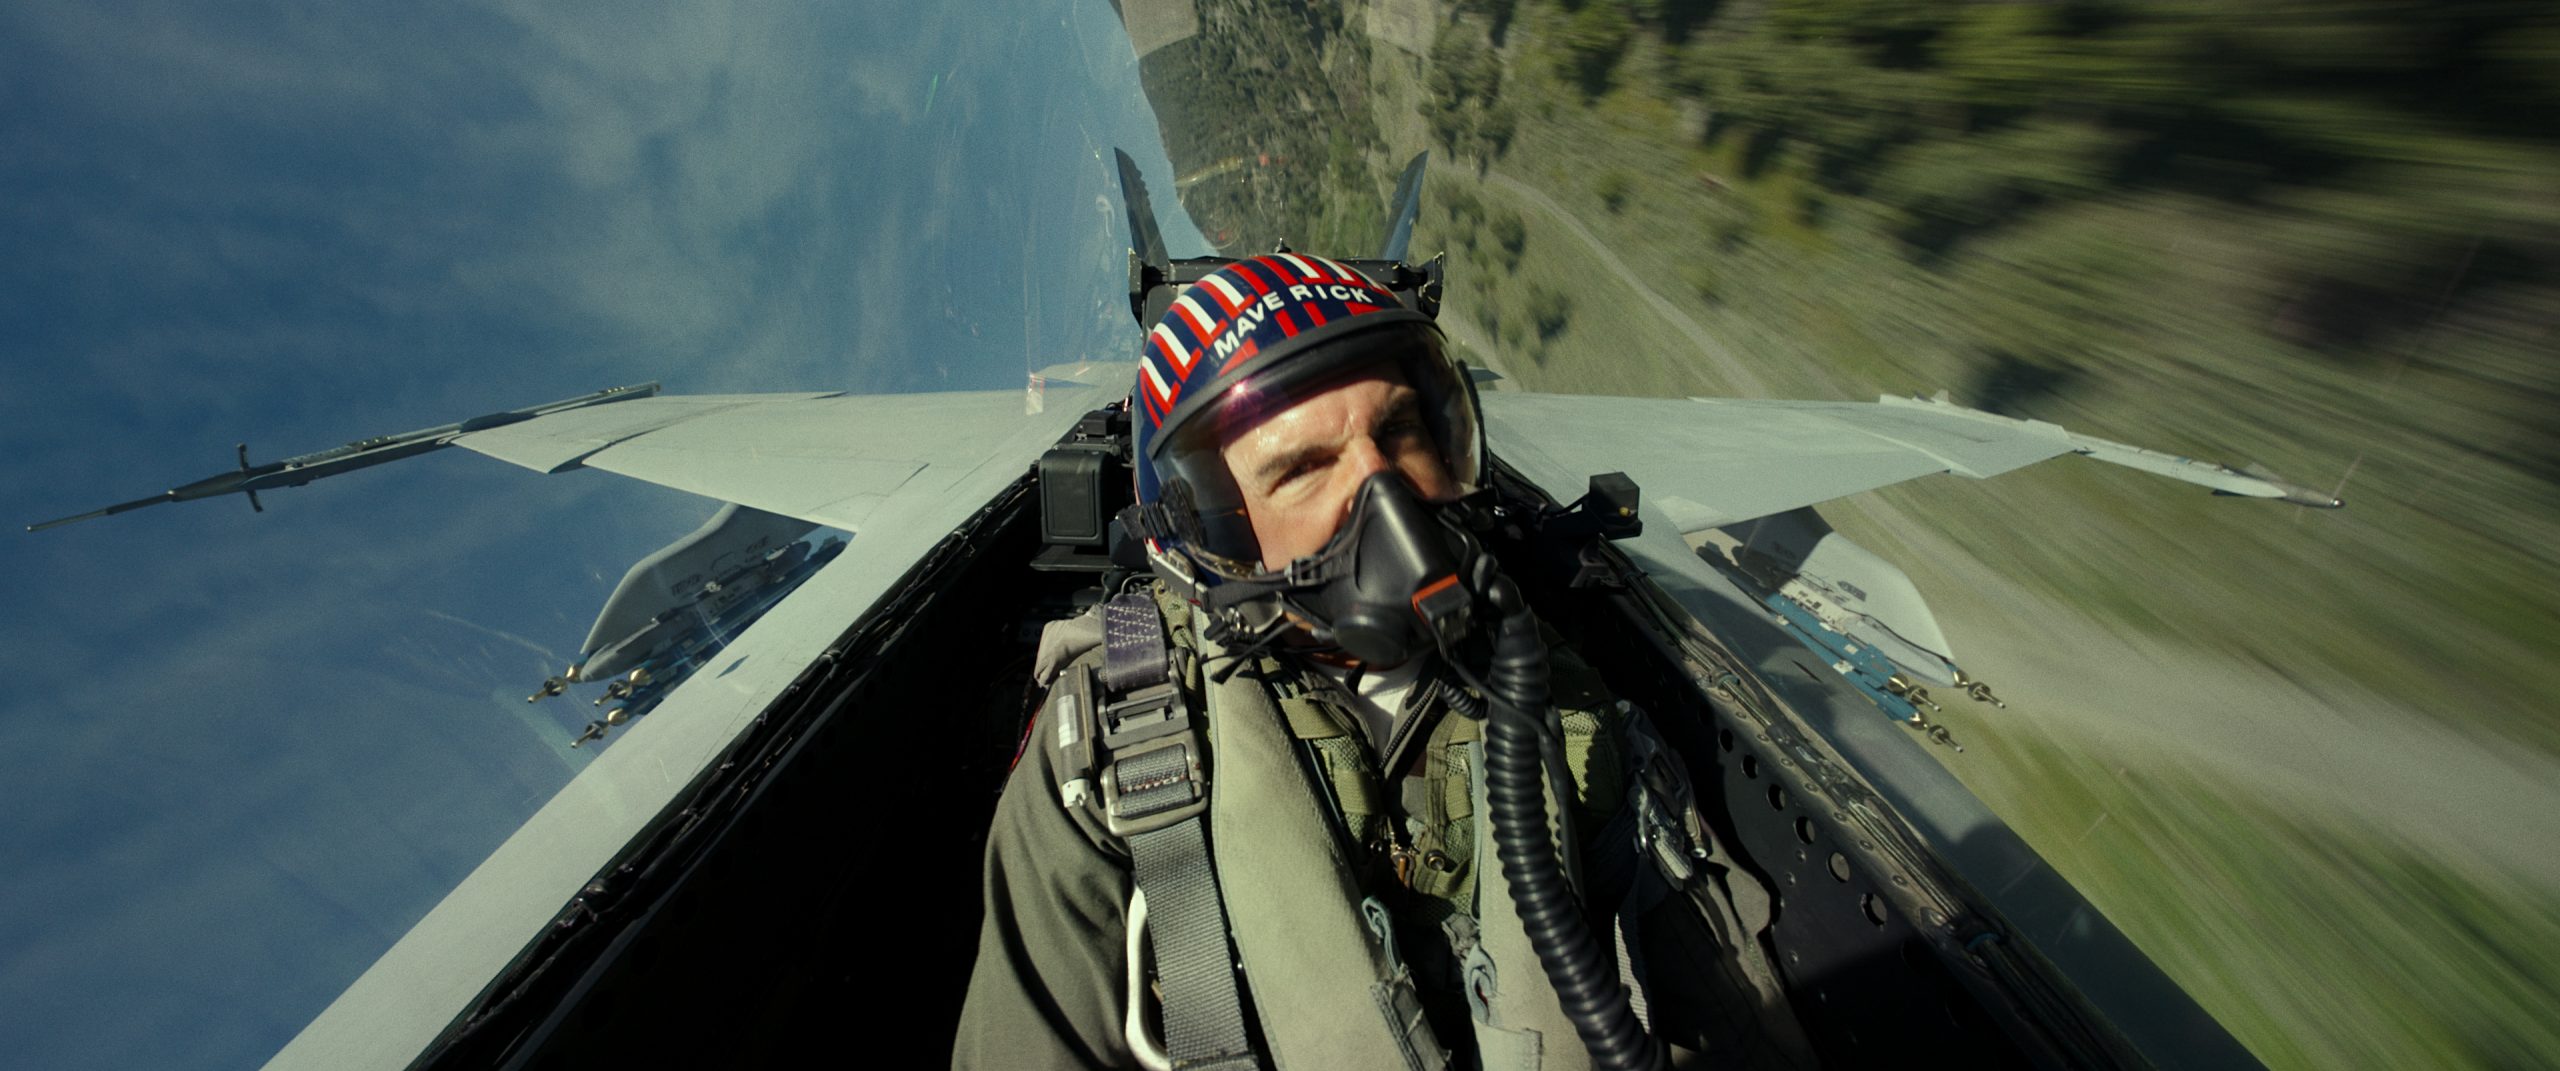 Maverick flying a plane in the new Top Gun Maverick film